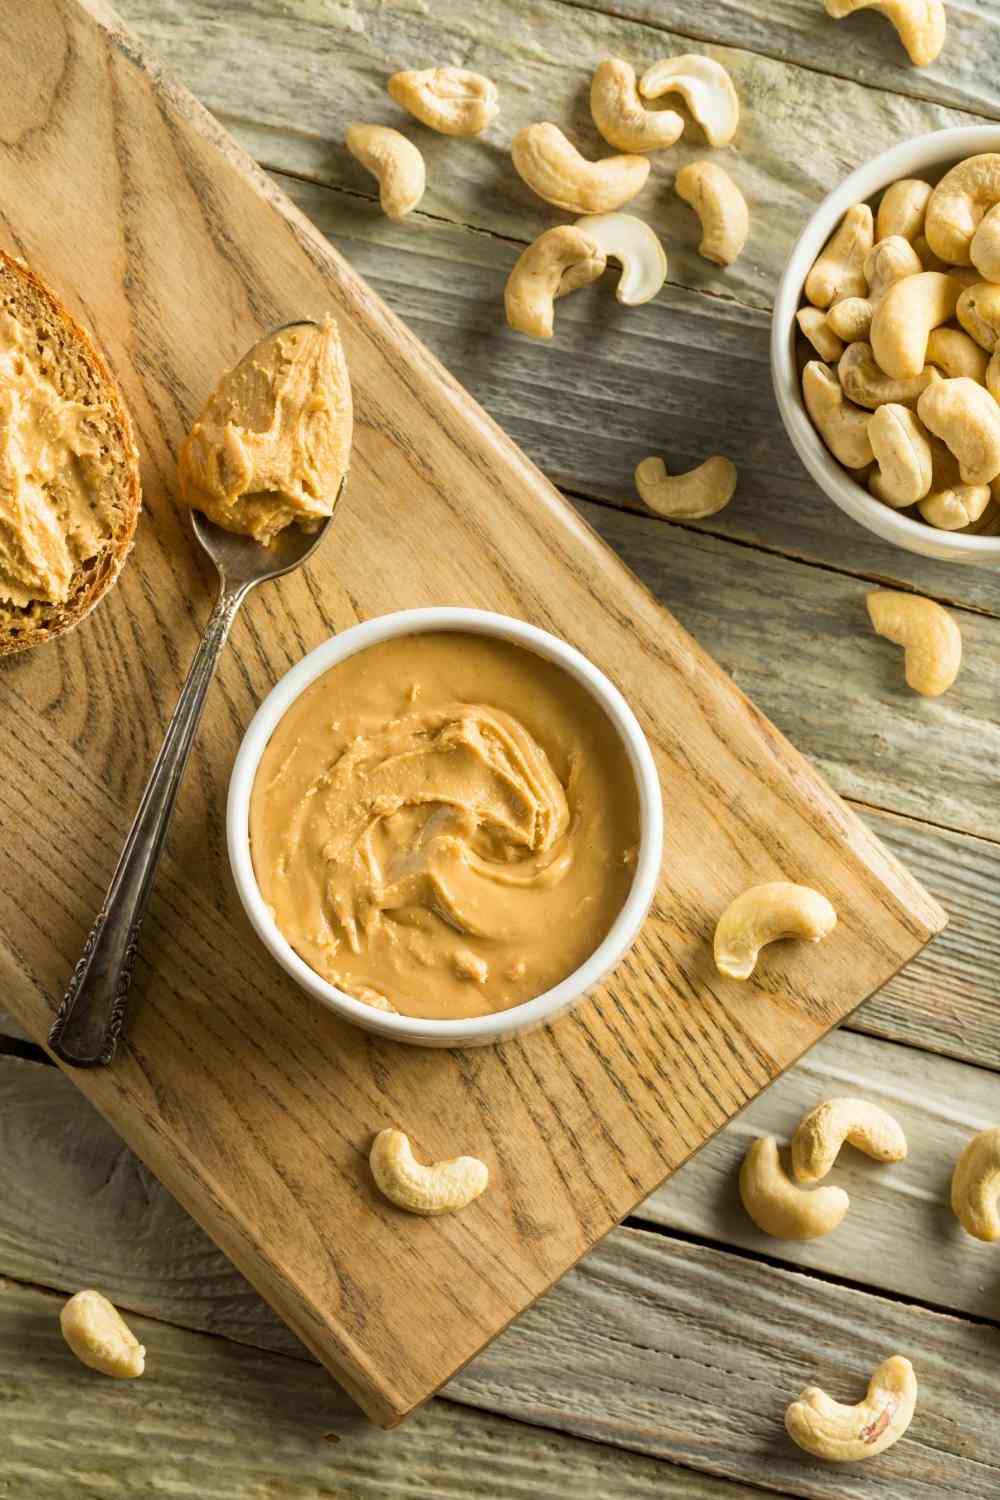 Cashew butter - Health Benefits of Nut Butters